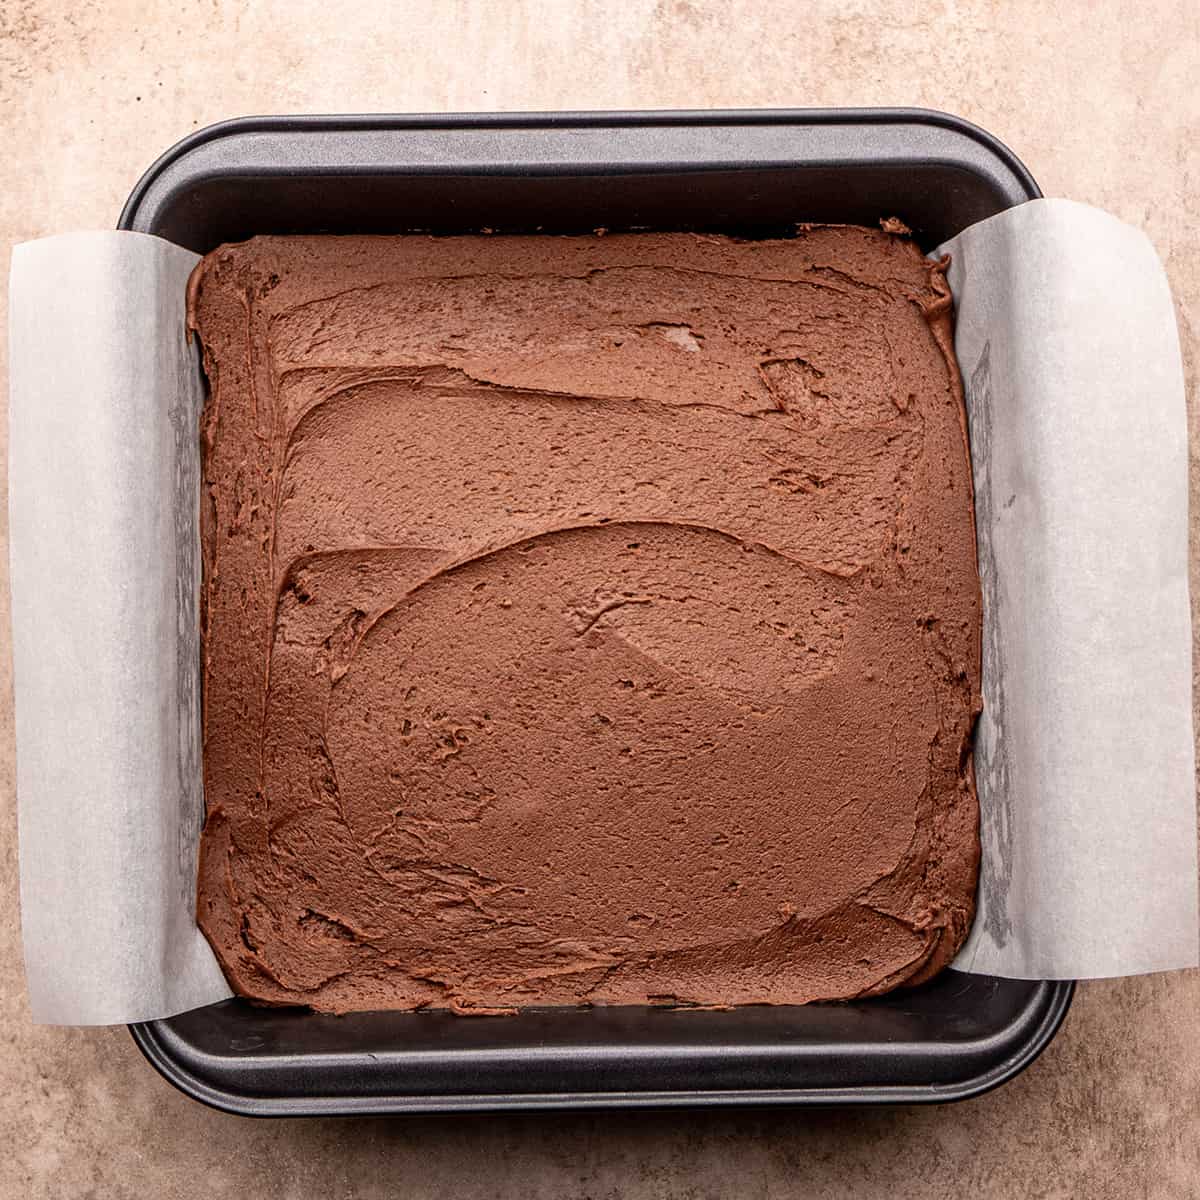 chocolate fudge mixture spread into prepared square pan